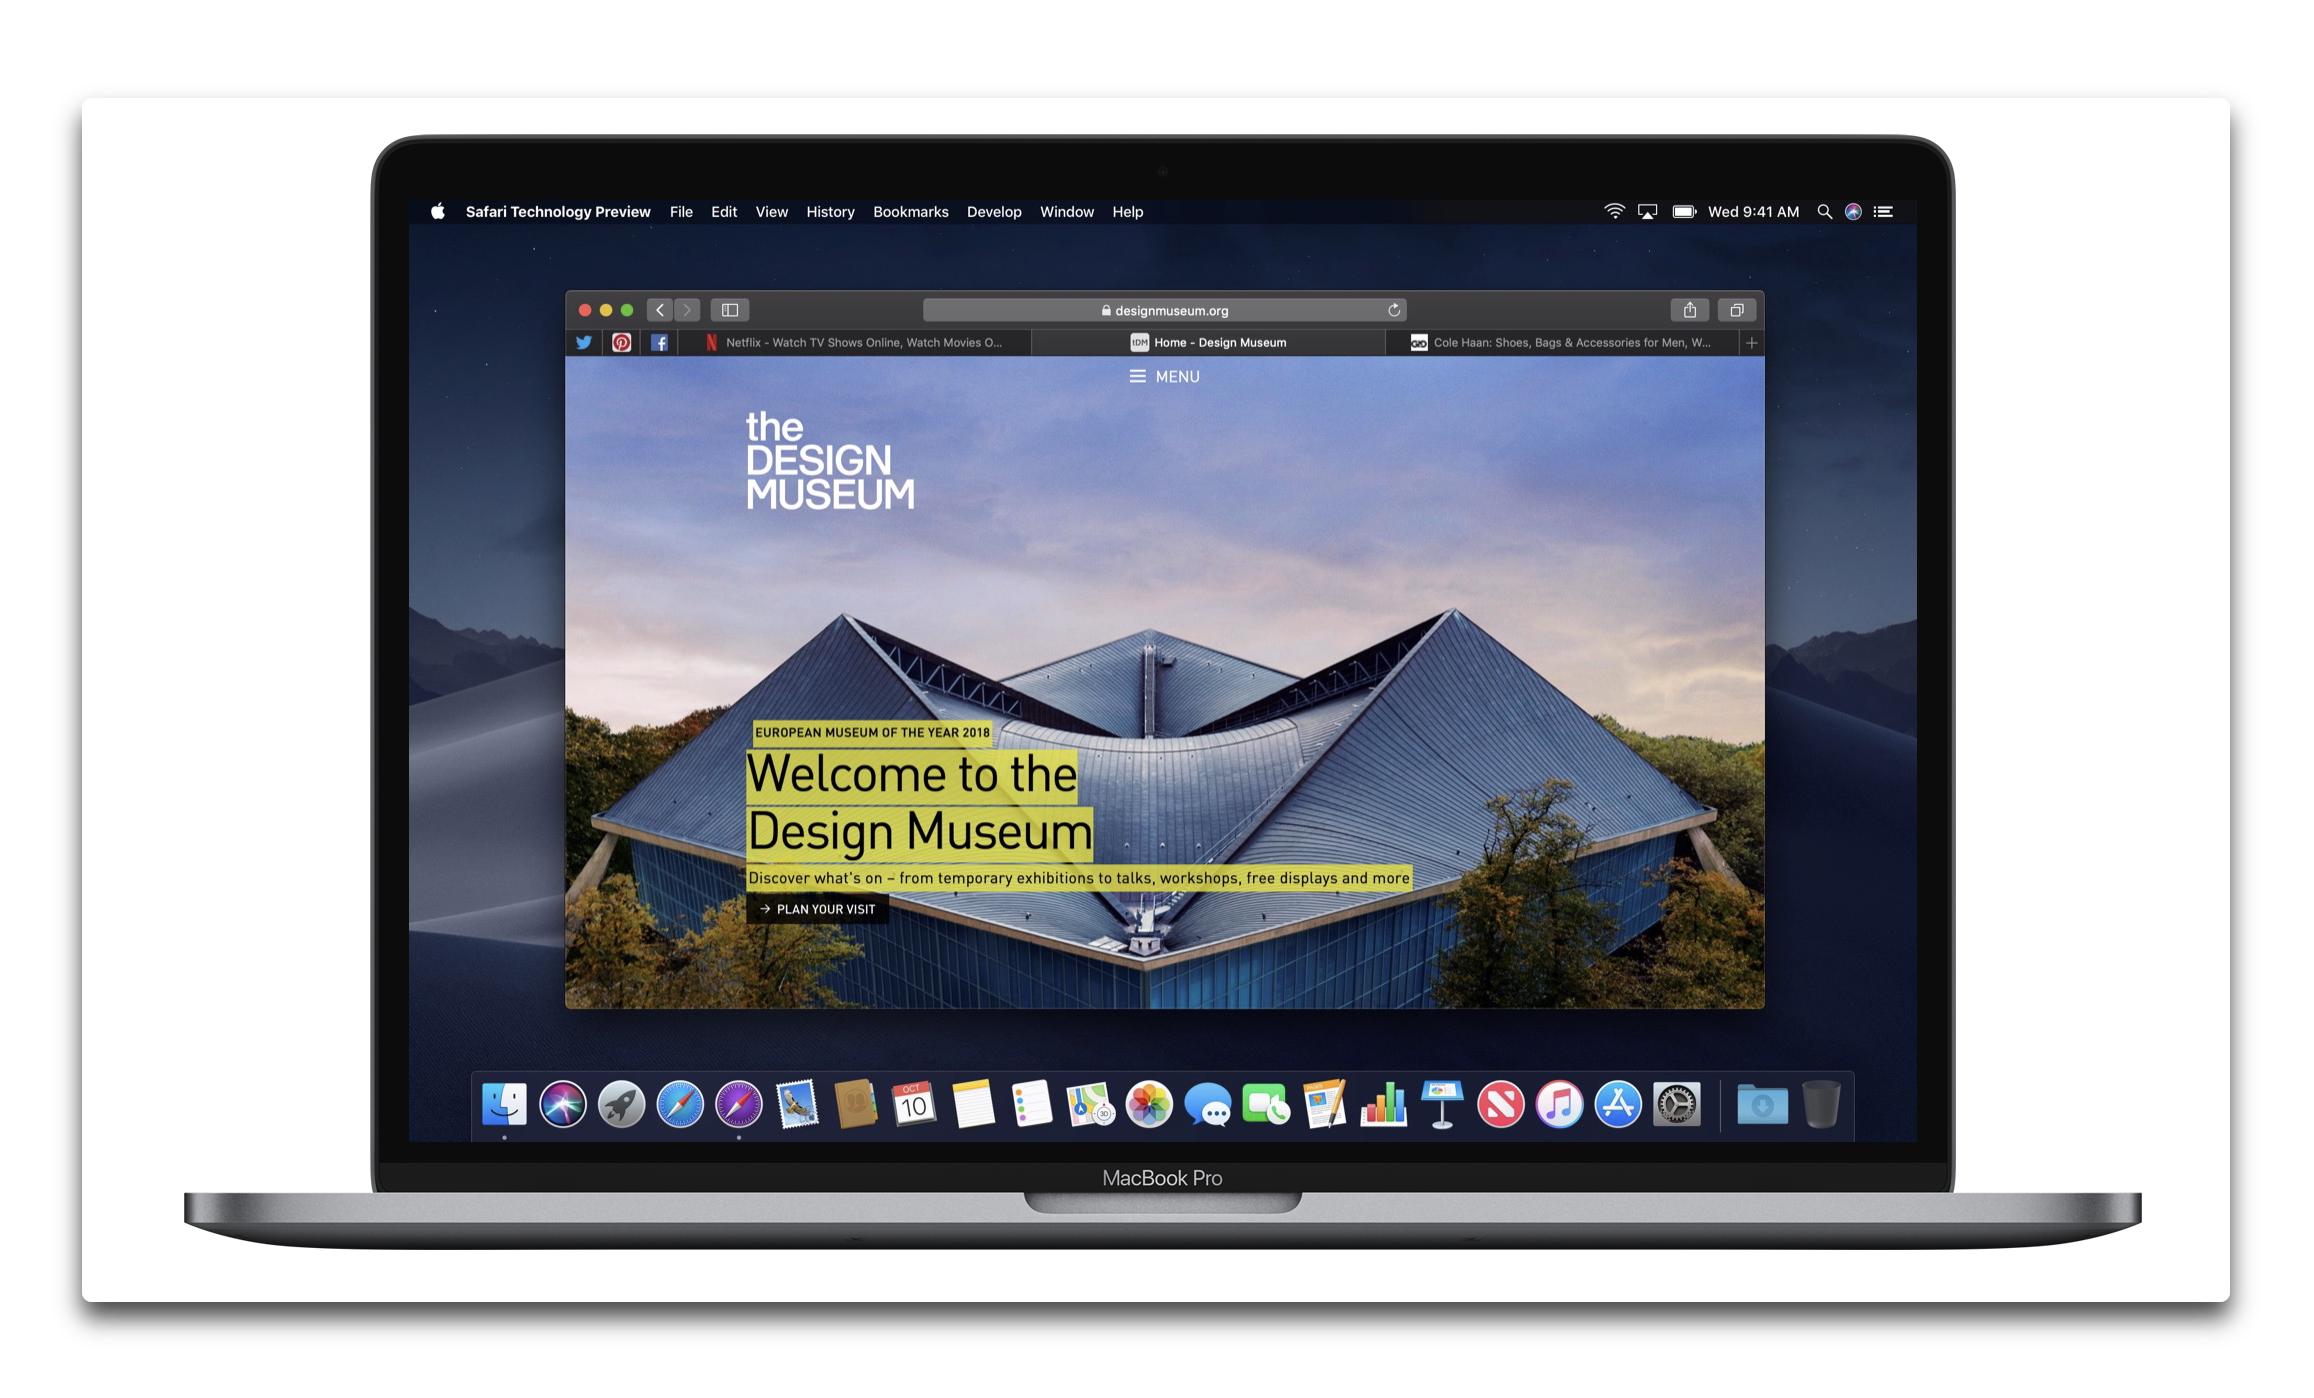 【Mac】Apple，「Safari Technology Preview Release 85」を開発者にリリース